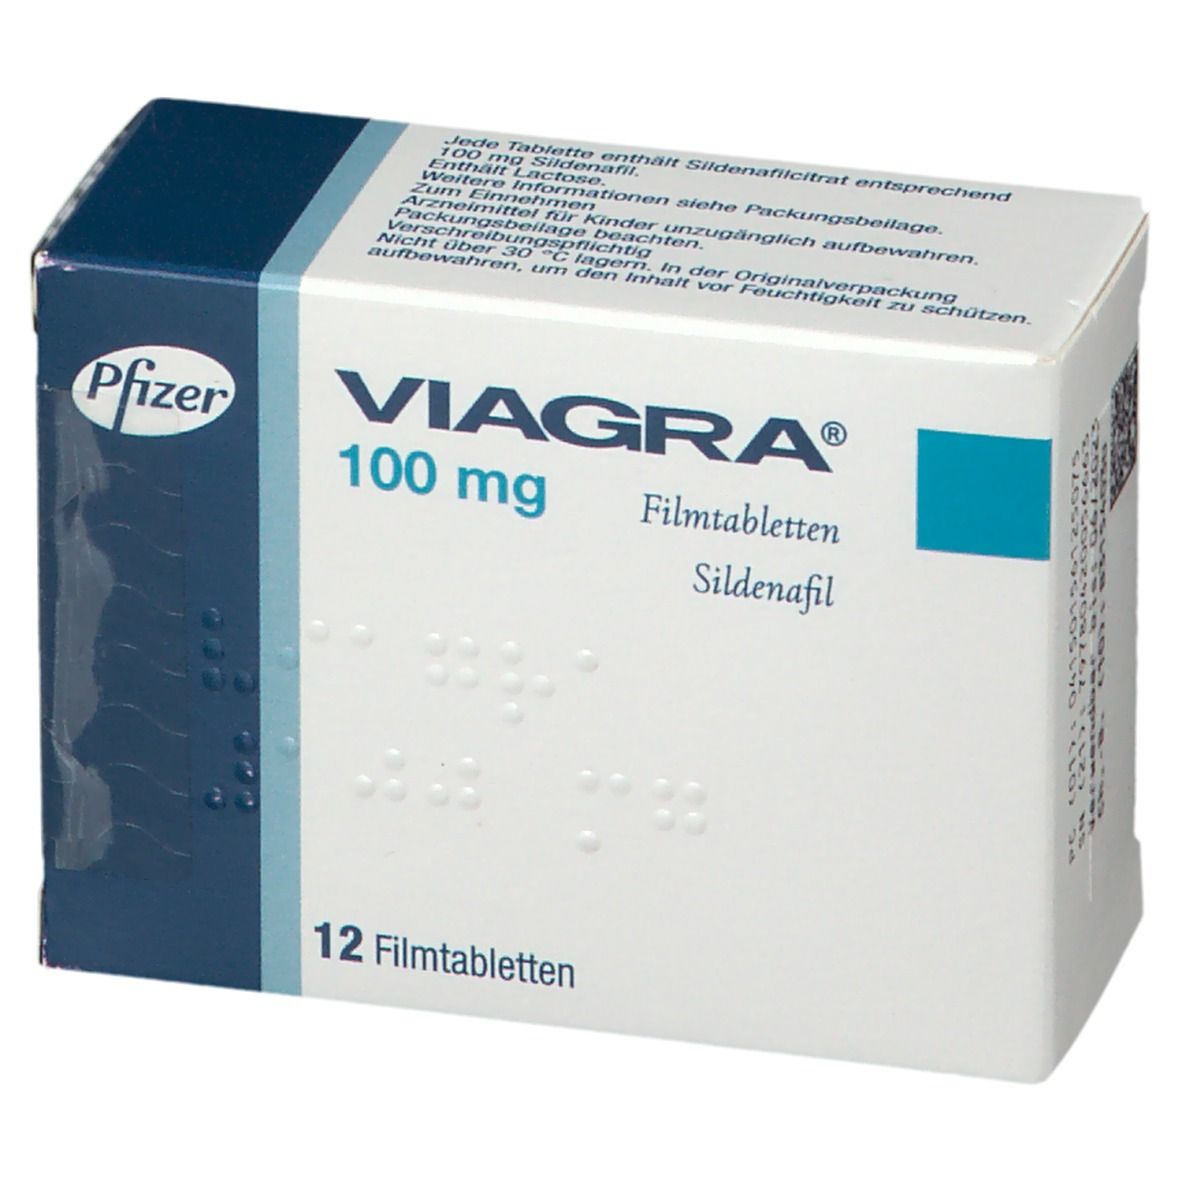 Viagra 100 mg 12 St mit dem E-Rezept kaufen - SHOP APOTHEKE